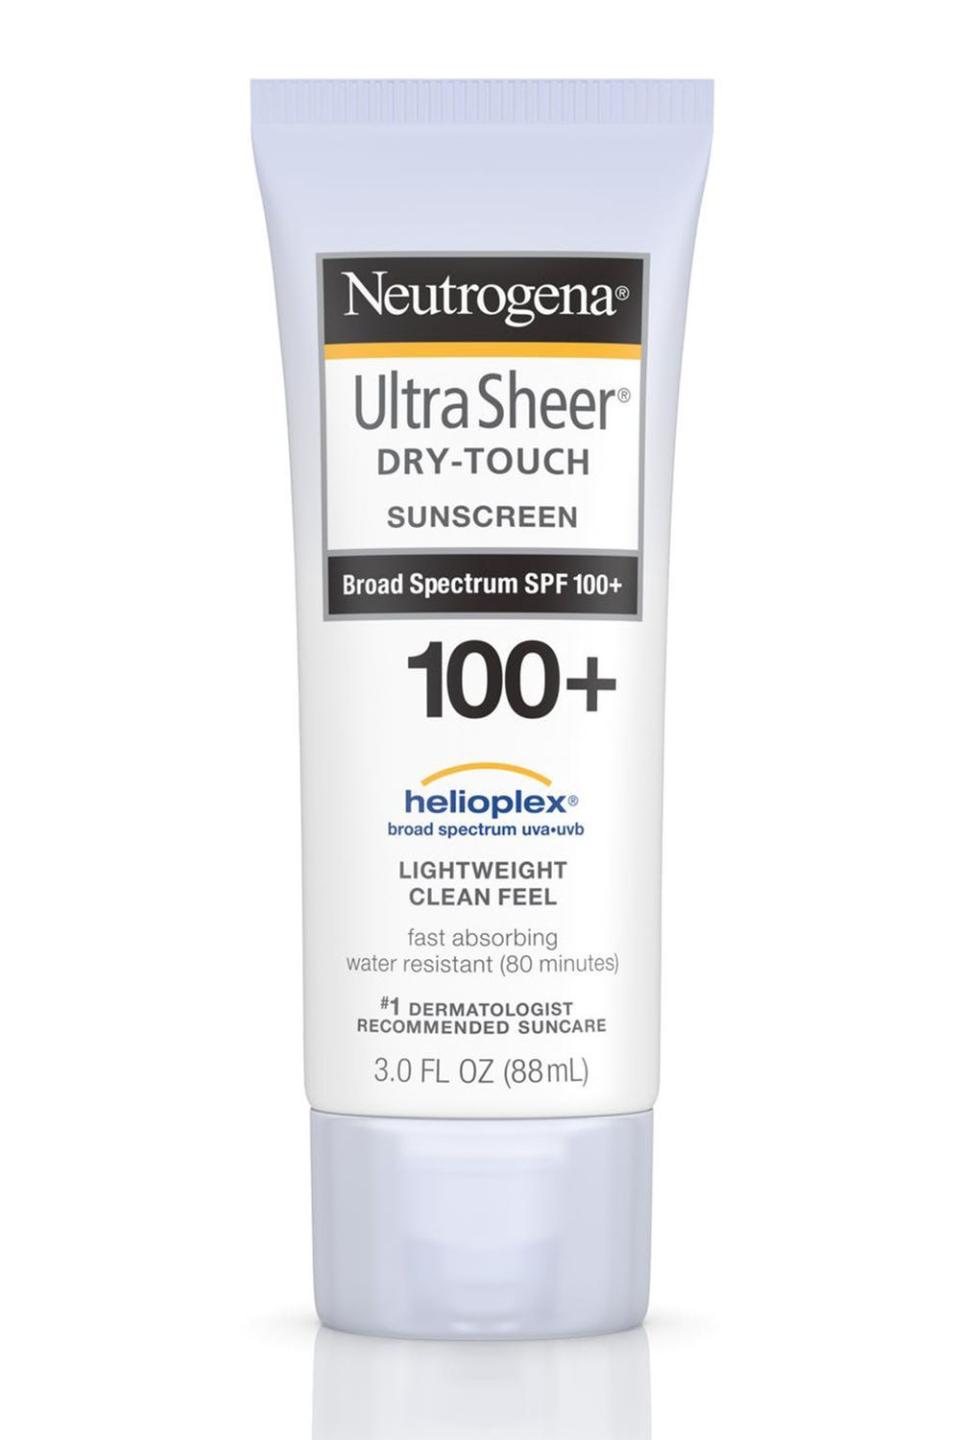 15) Neutrogena Ultra Sheer Dry-Touch Sunscreen SPF 100+